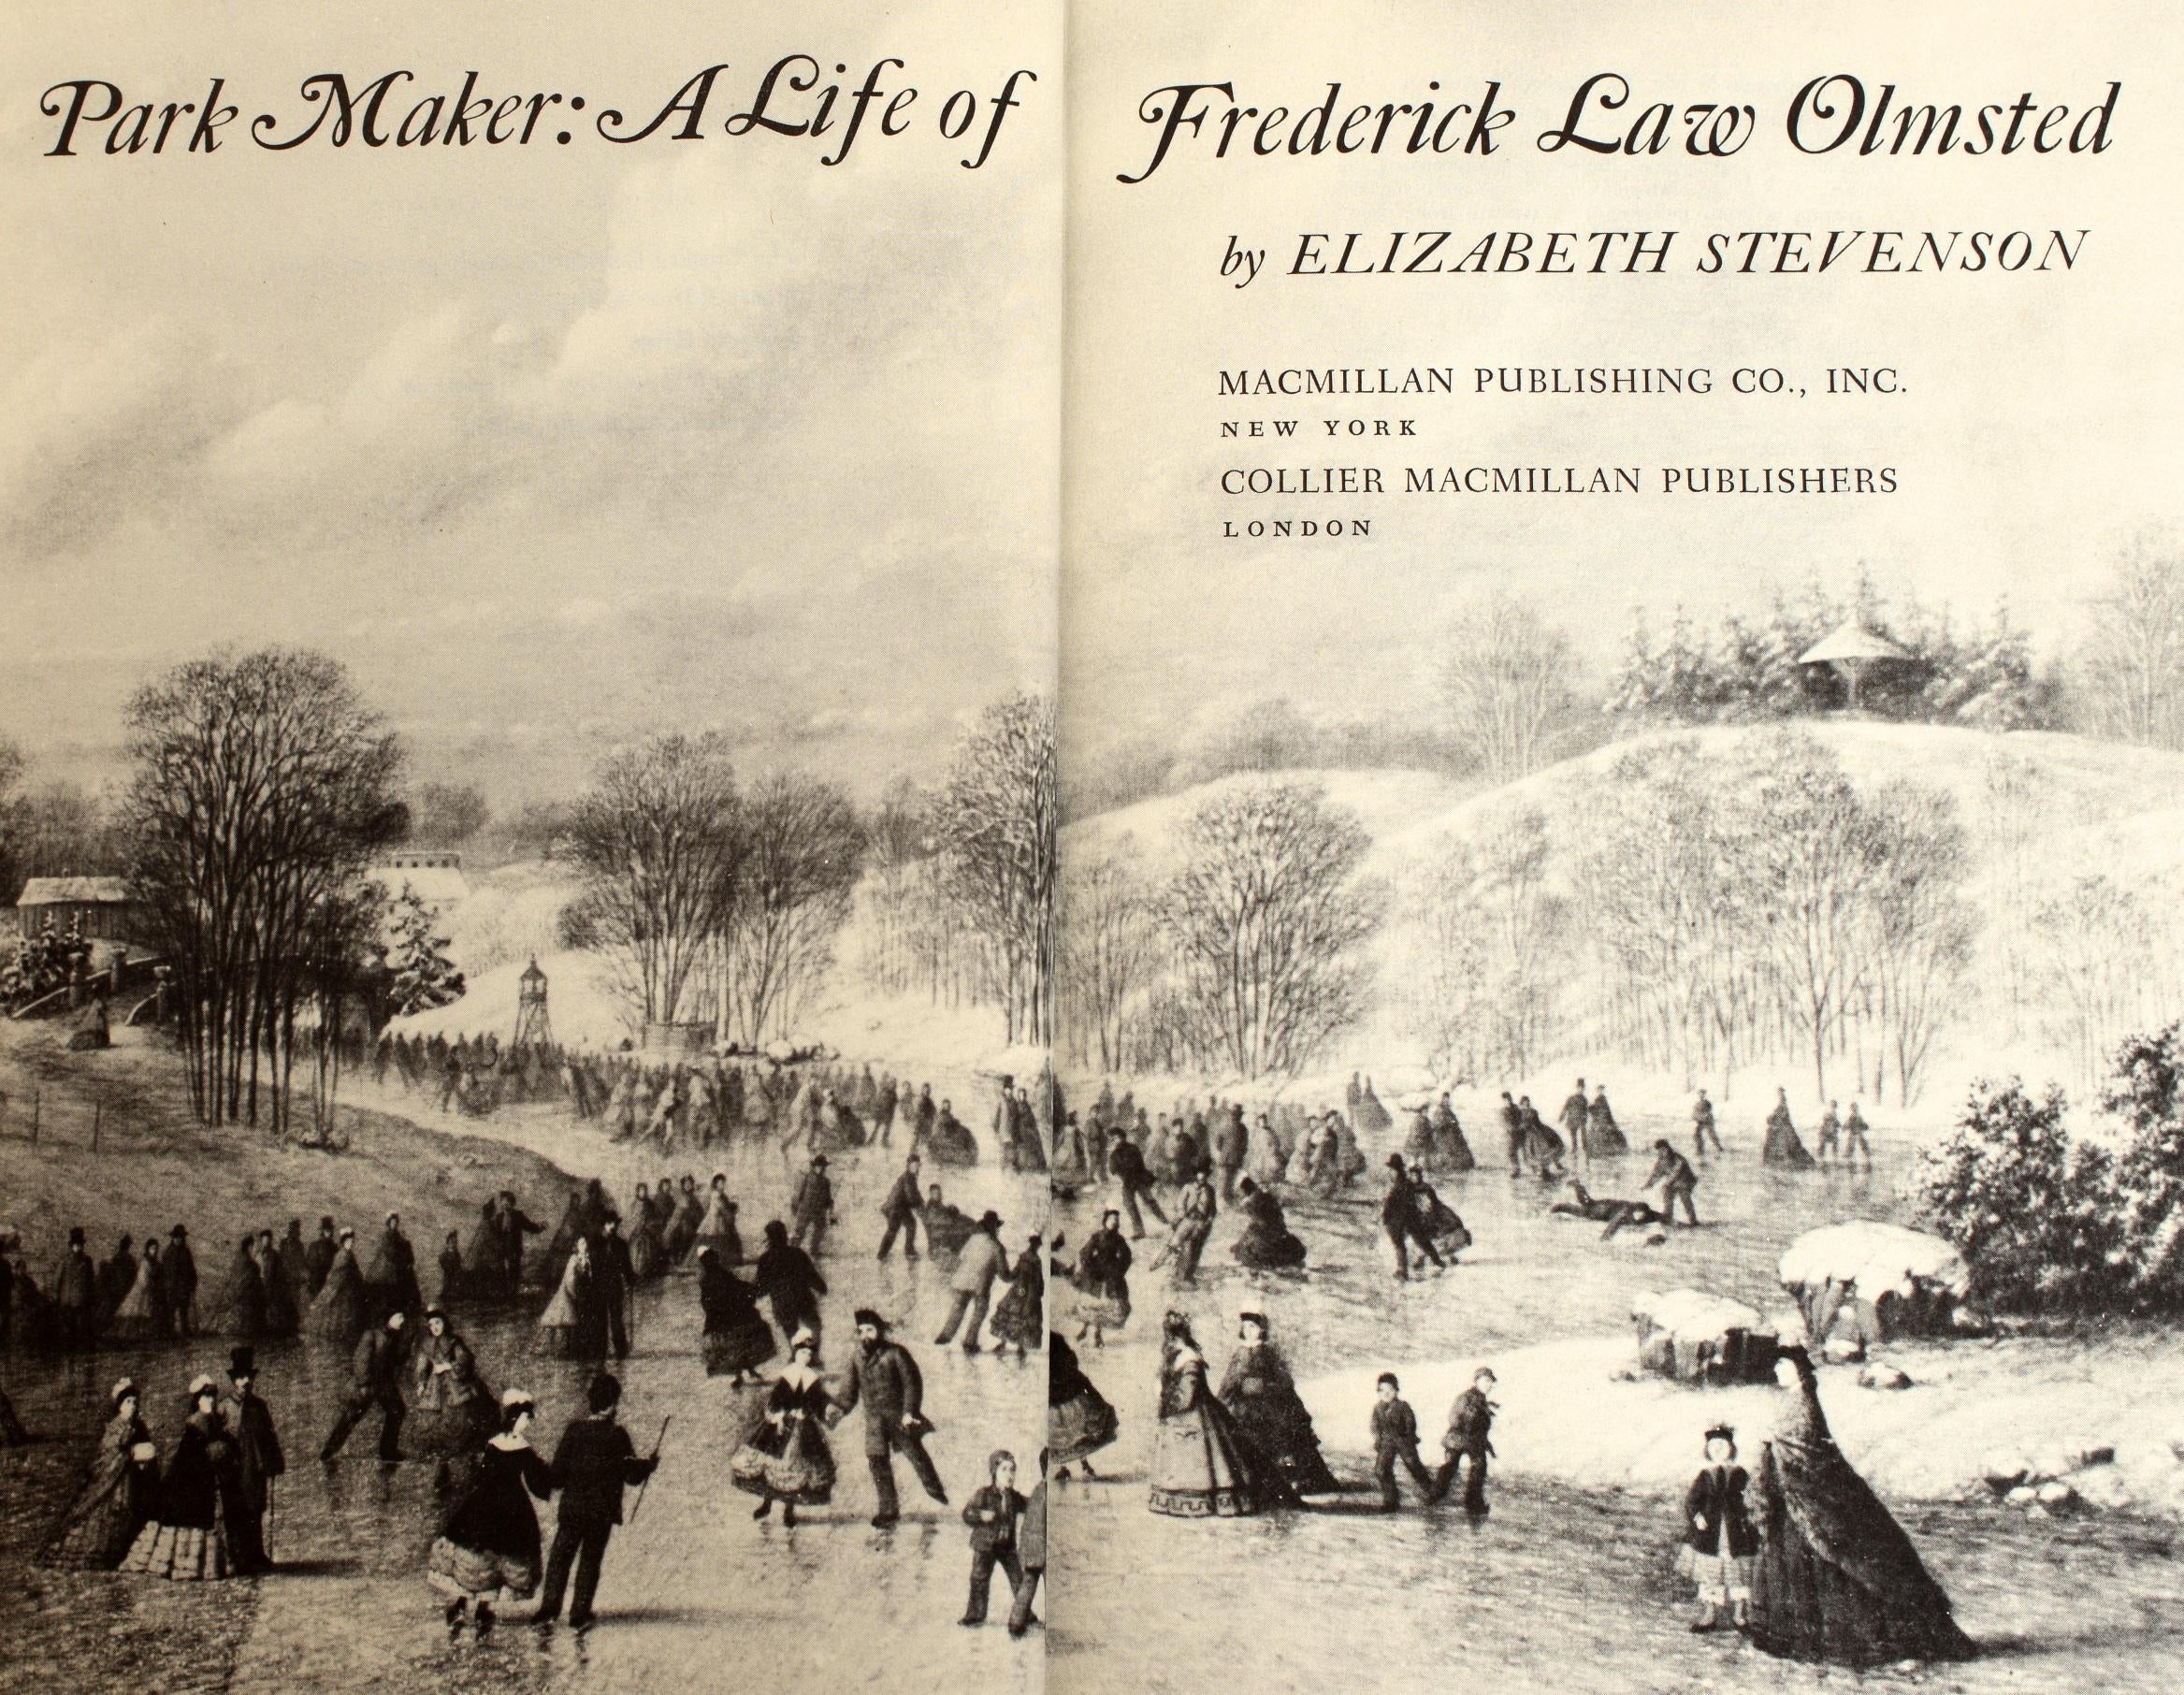 Park Maker Life of Frederick Law Olmsted by Elizabeth Stevenson, 1st Printing 7